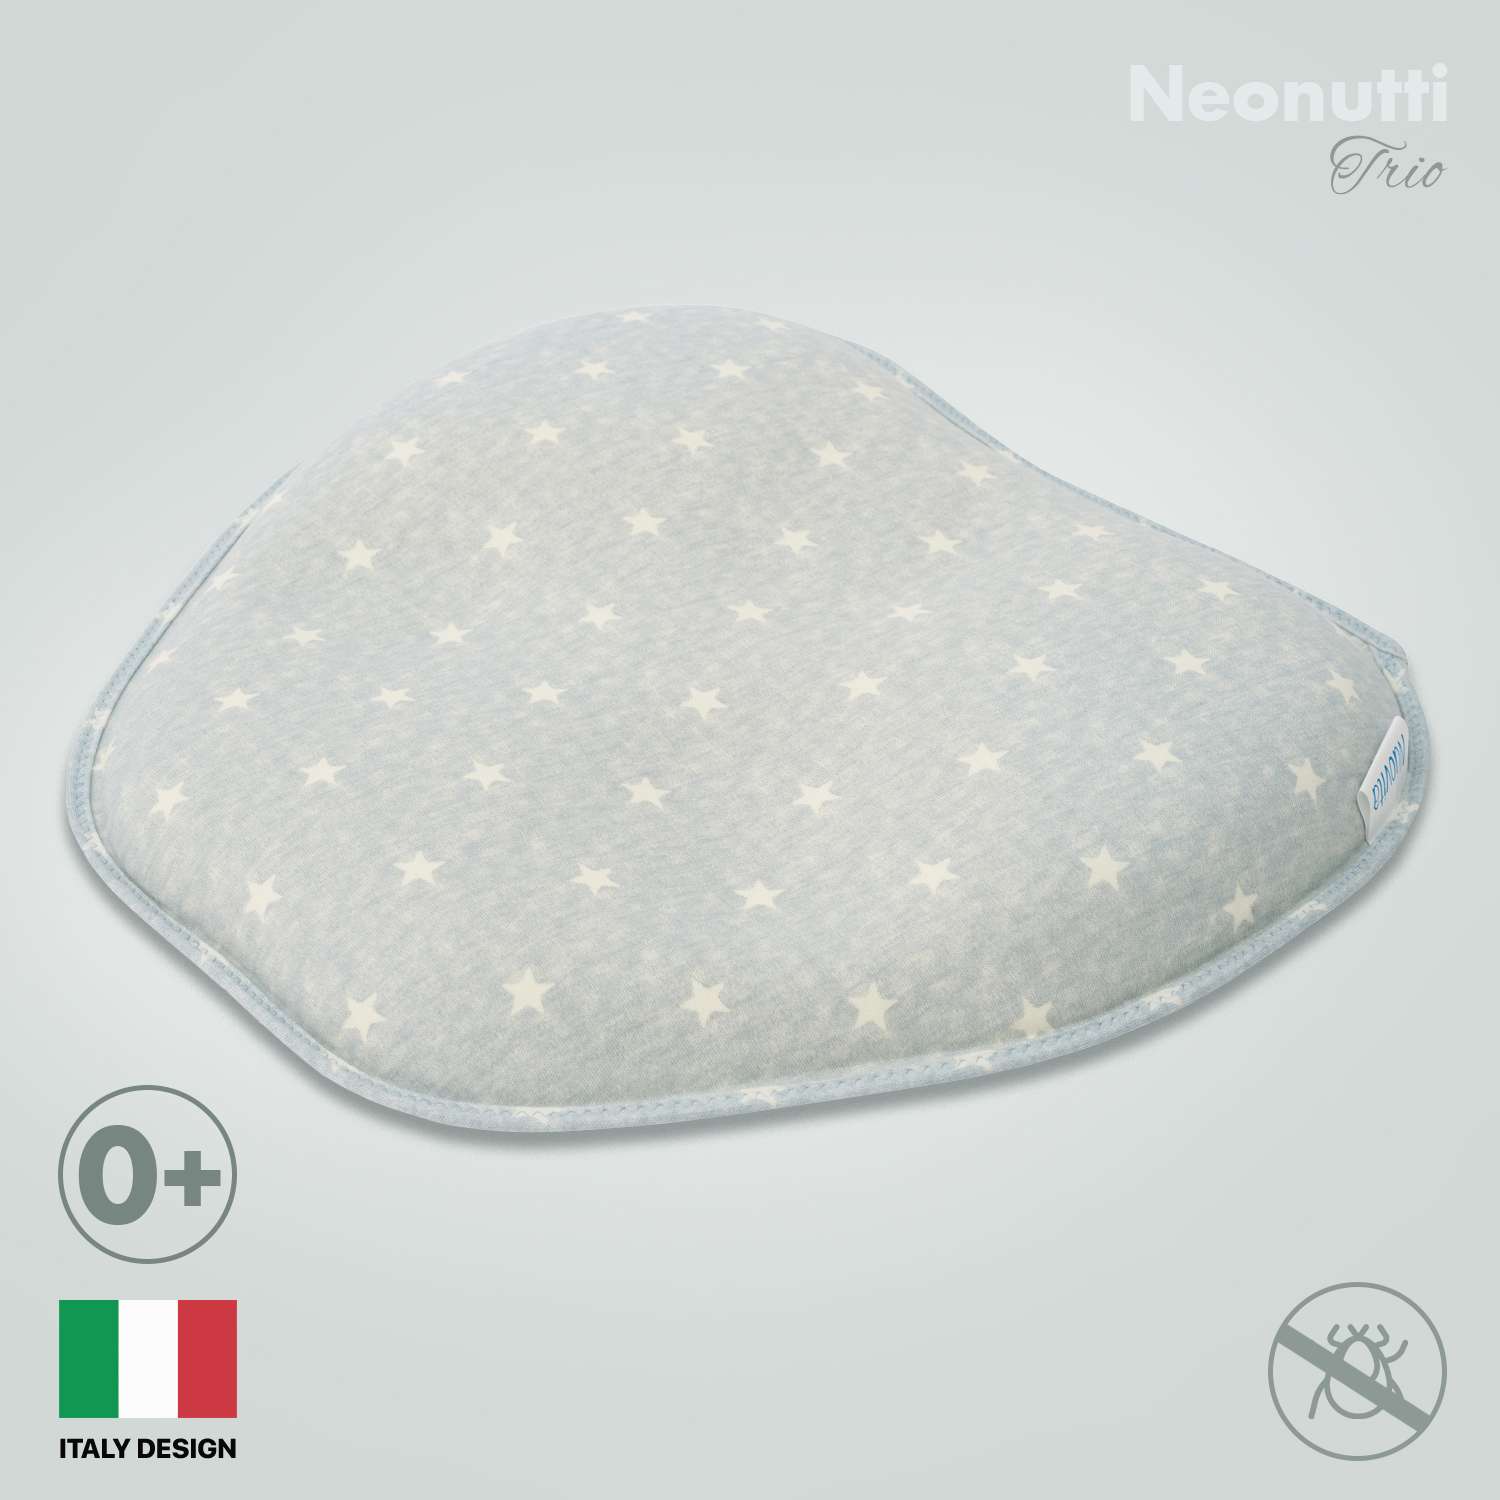 Подушка для новорожденного Nuovita Neonutti Trio Dipinto Звезды голубая - фото 1